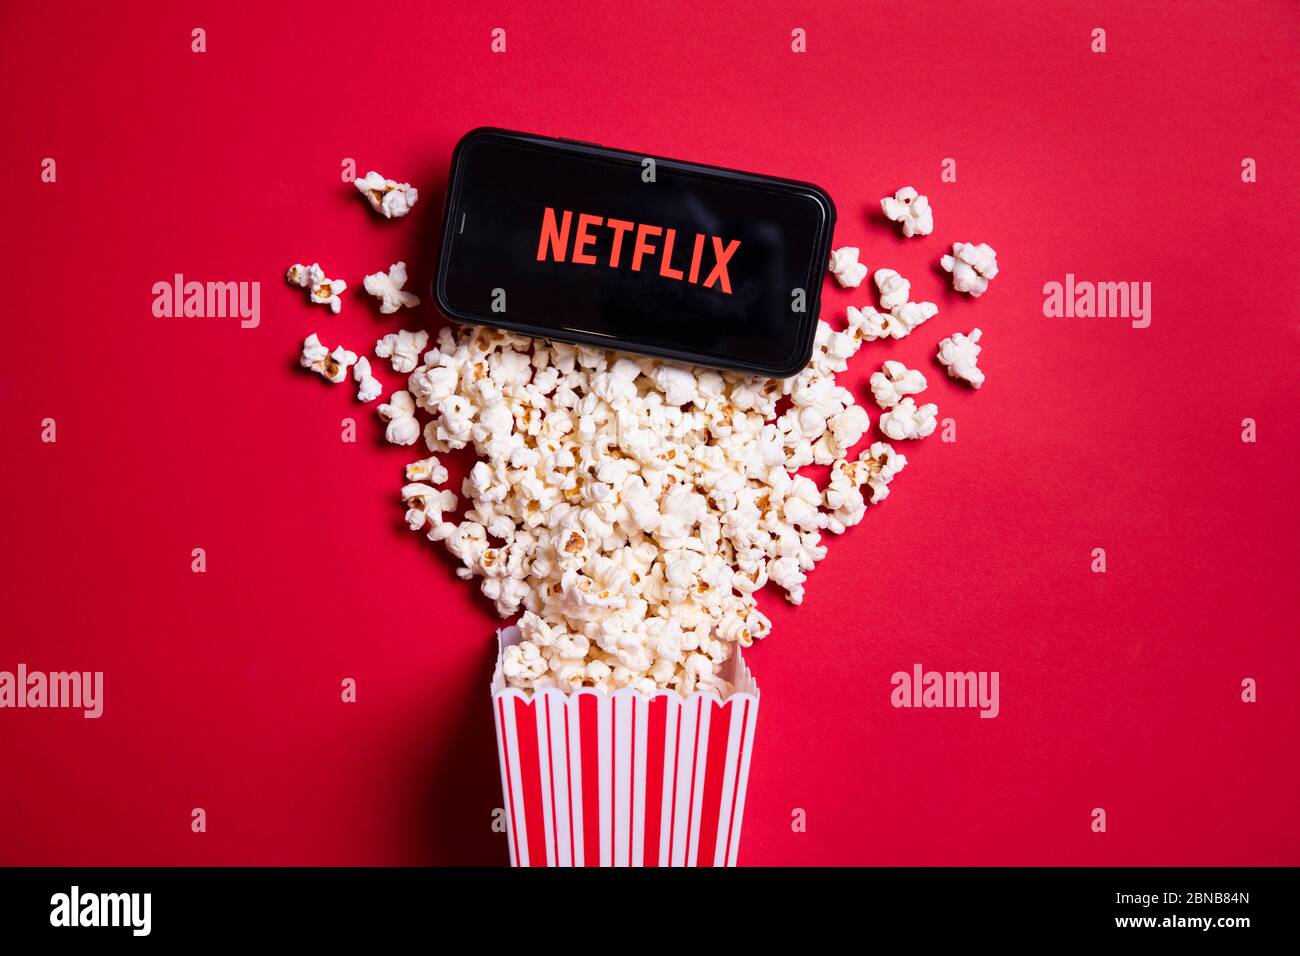 LONDON, UK - MAY 14 2020: Netflix logo on a smartphone with popcorn Stock Photo